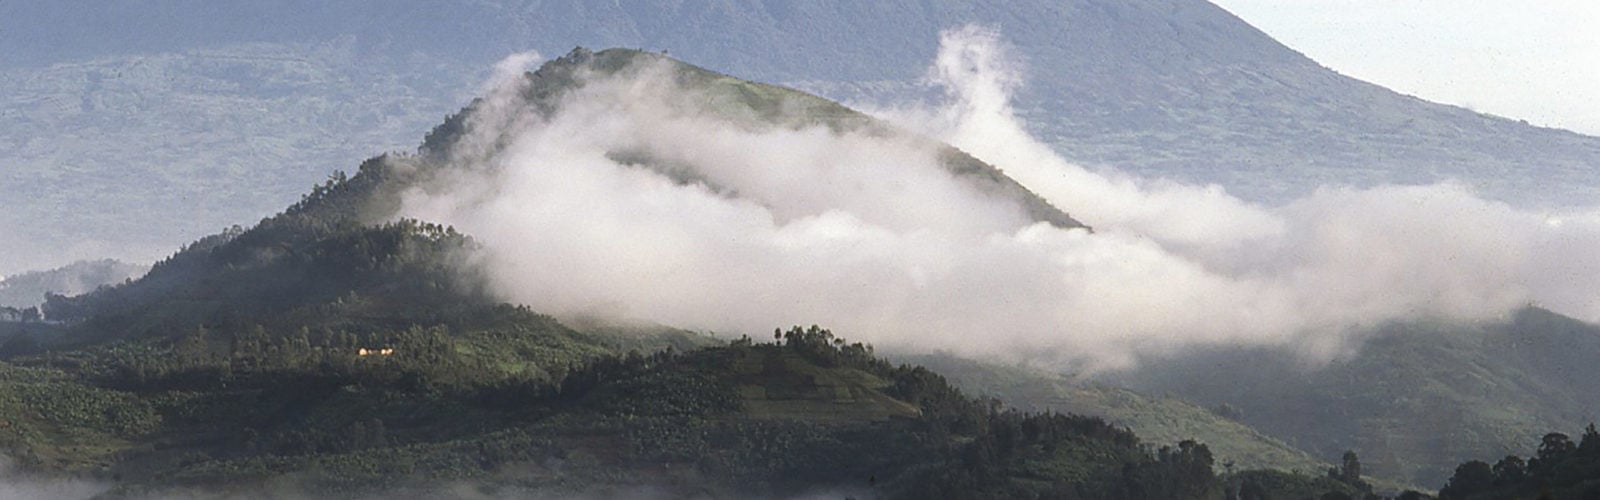 volcanoes-national-park-rwanda